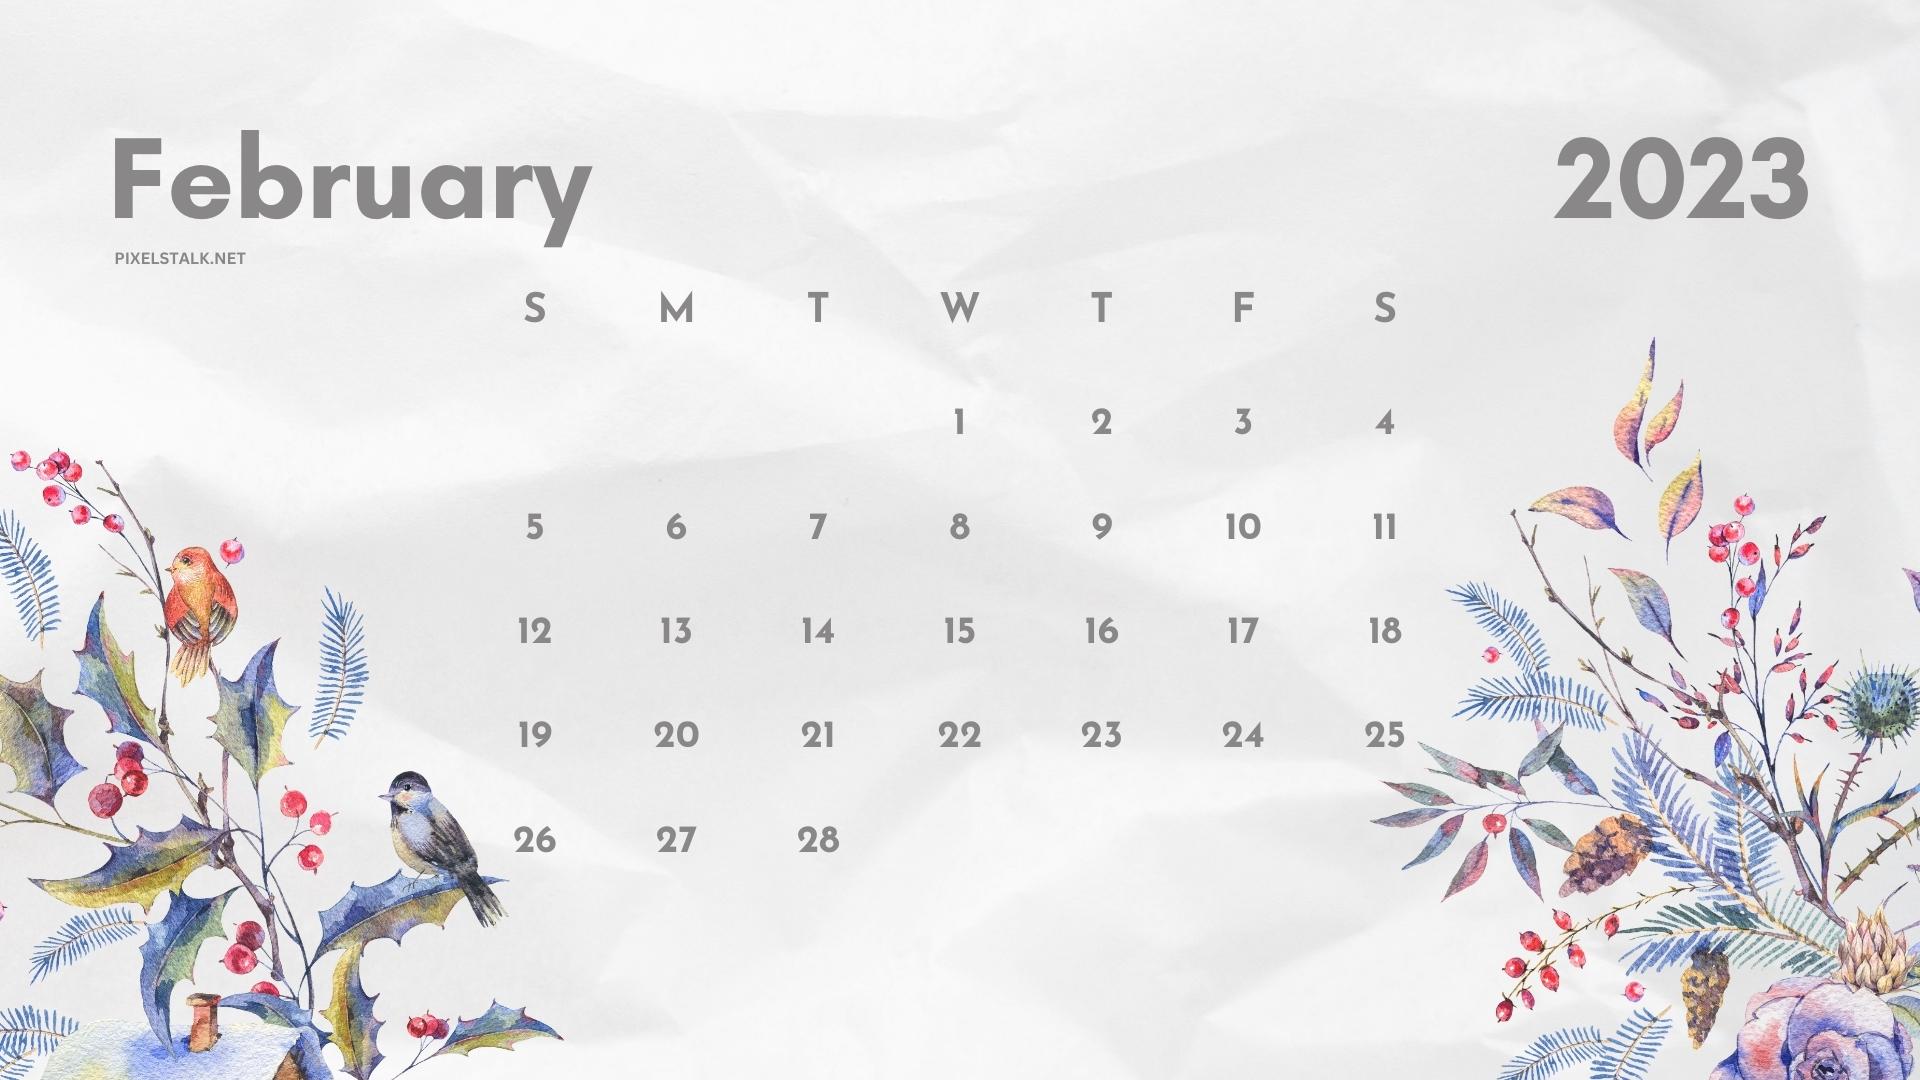 February 2023 Calendar Desktop Wallpapers  PixelsTalkNet